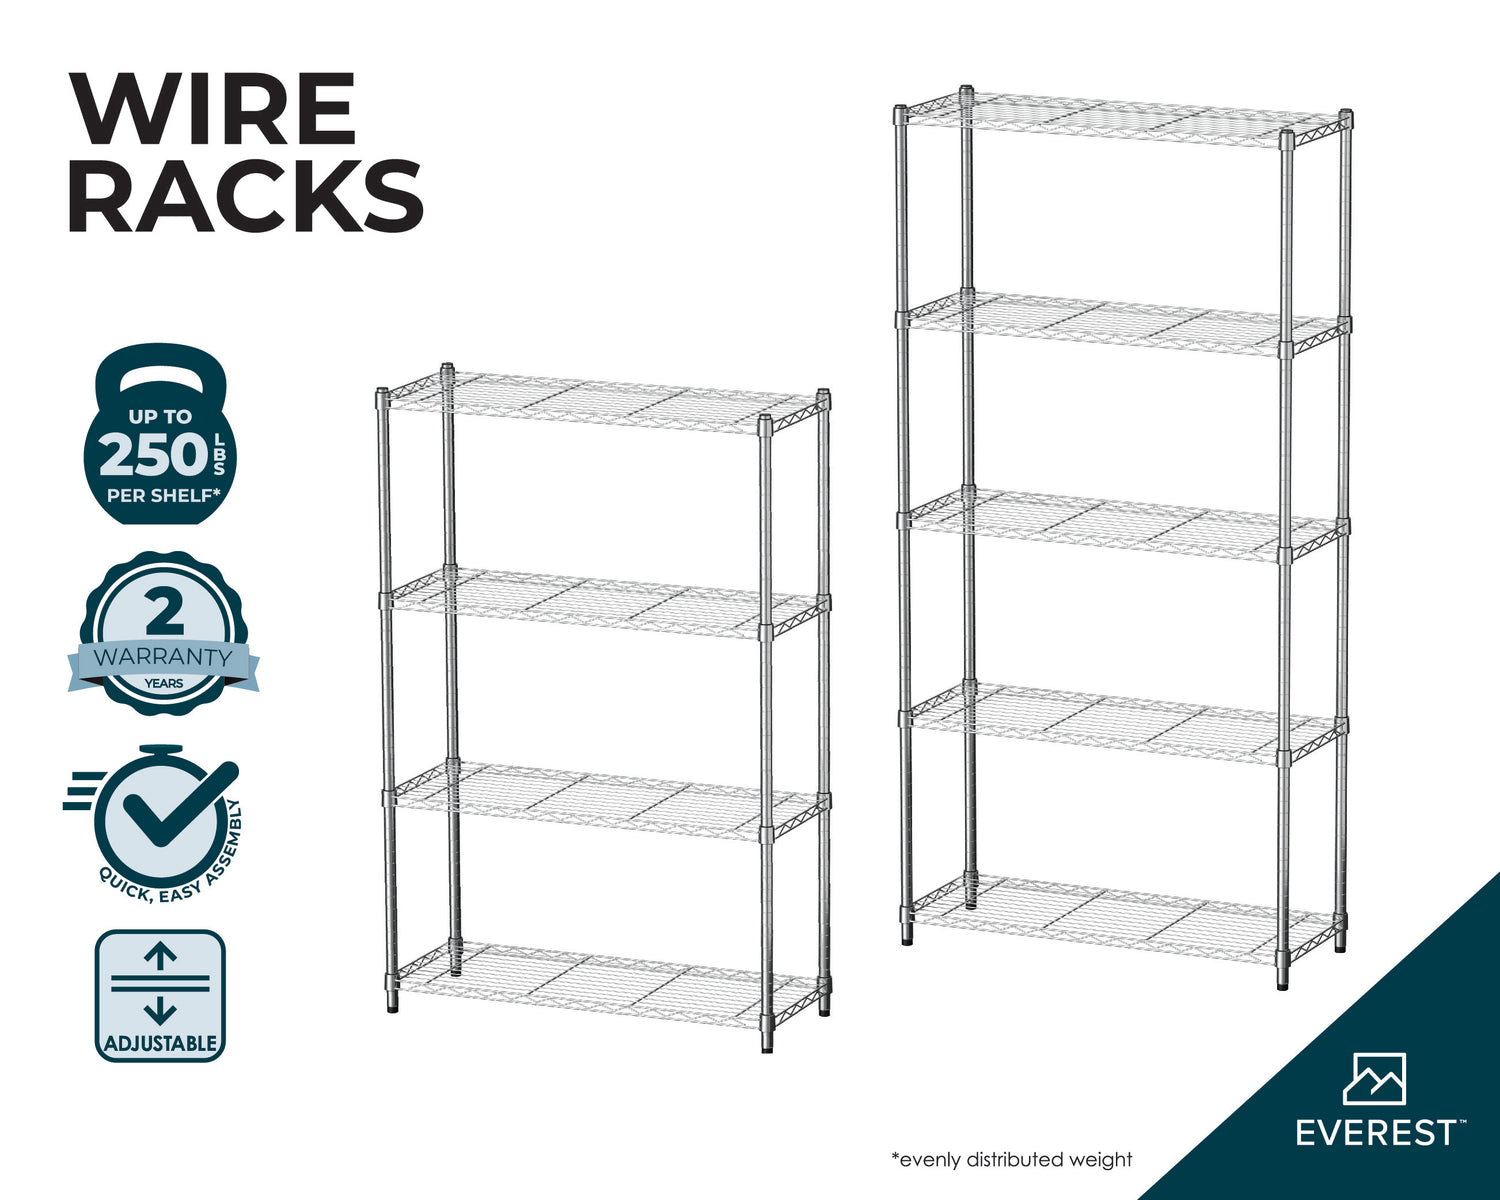 Everest Wire Racks